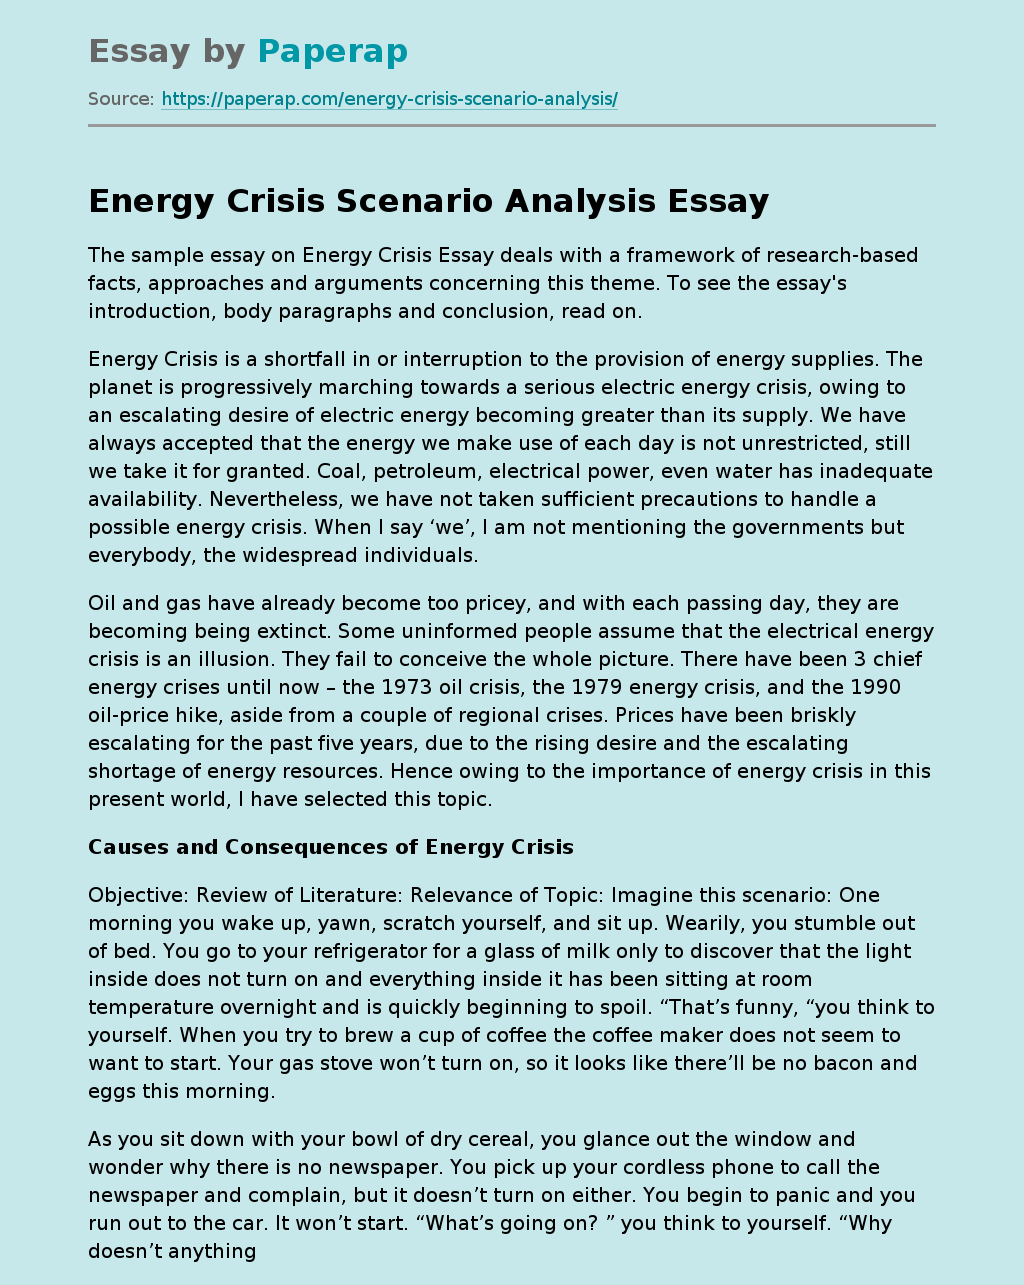 Energy Crisis Scenario Analysis